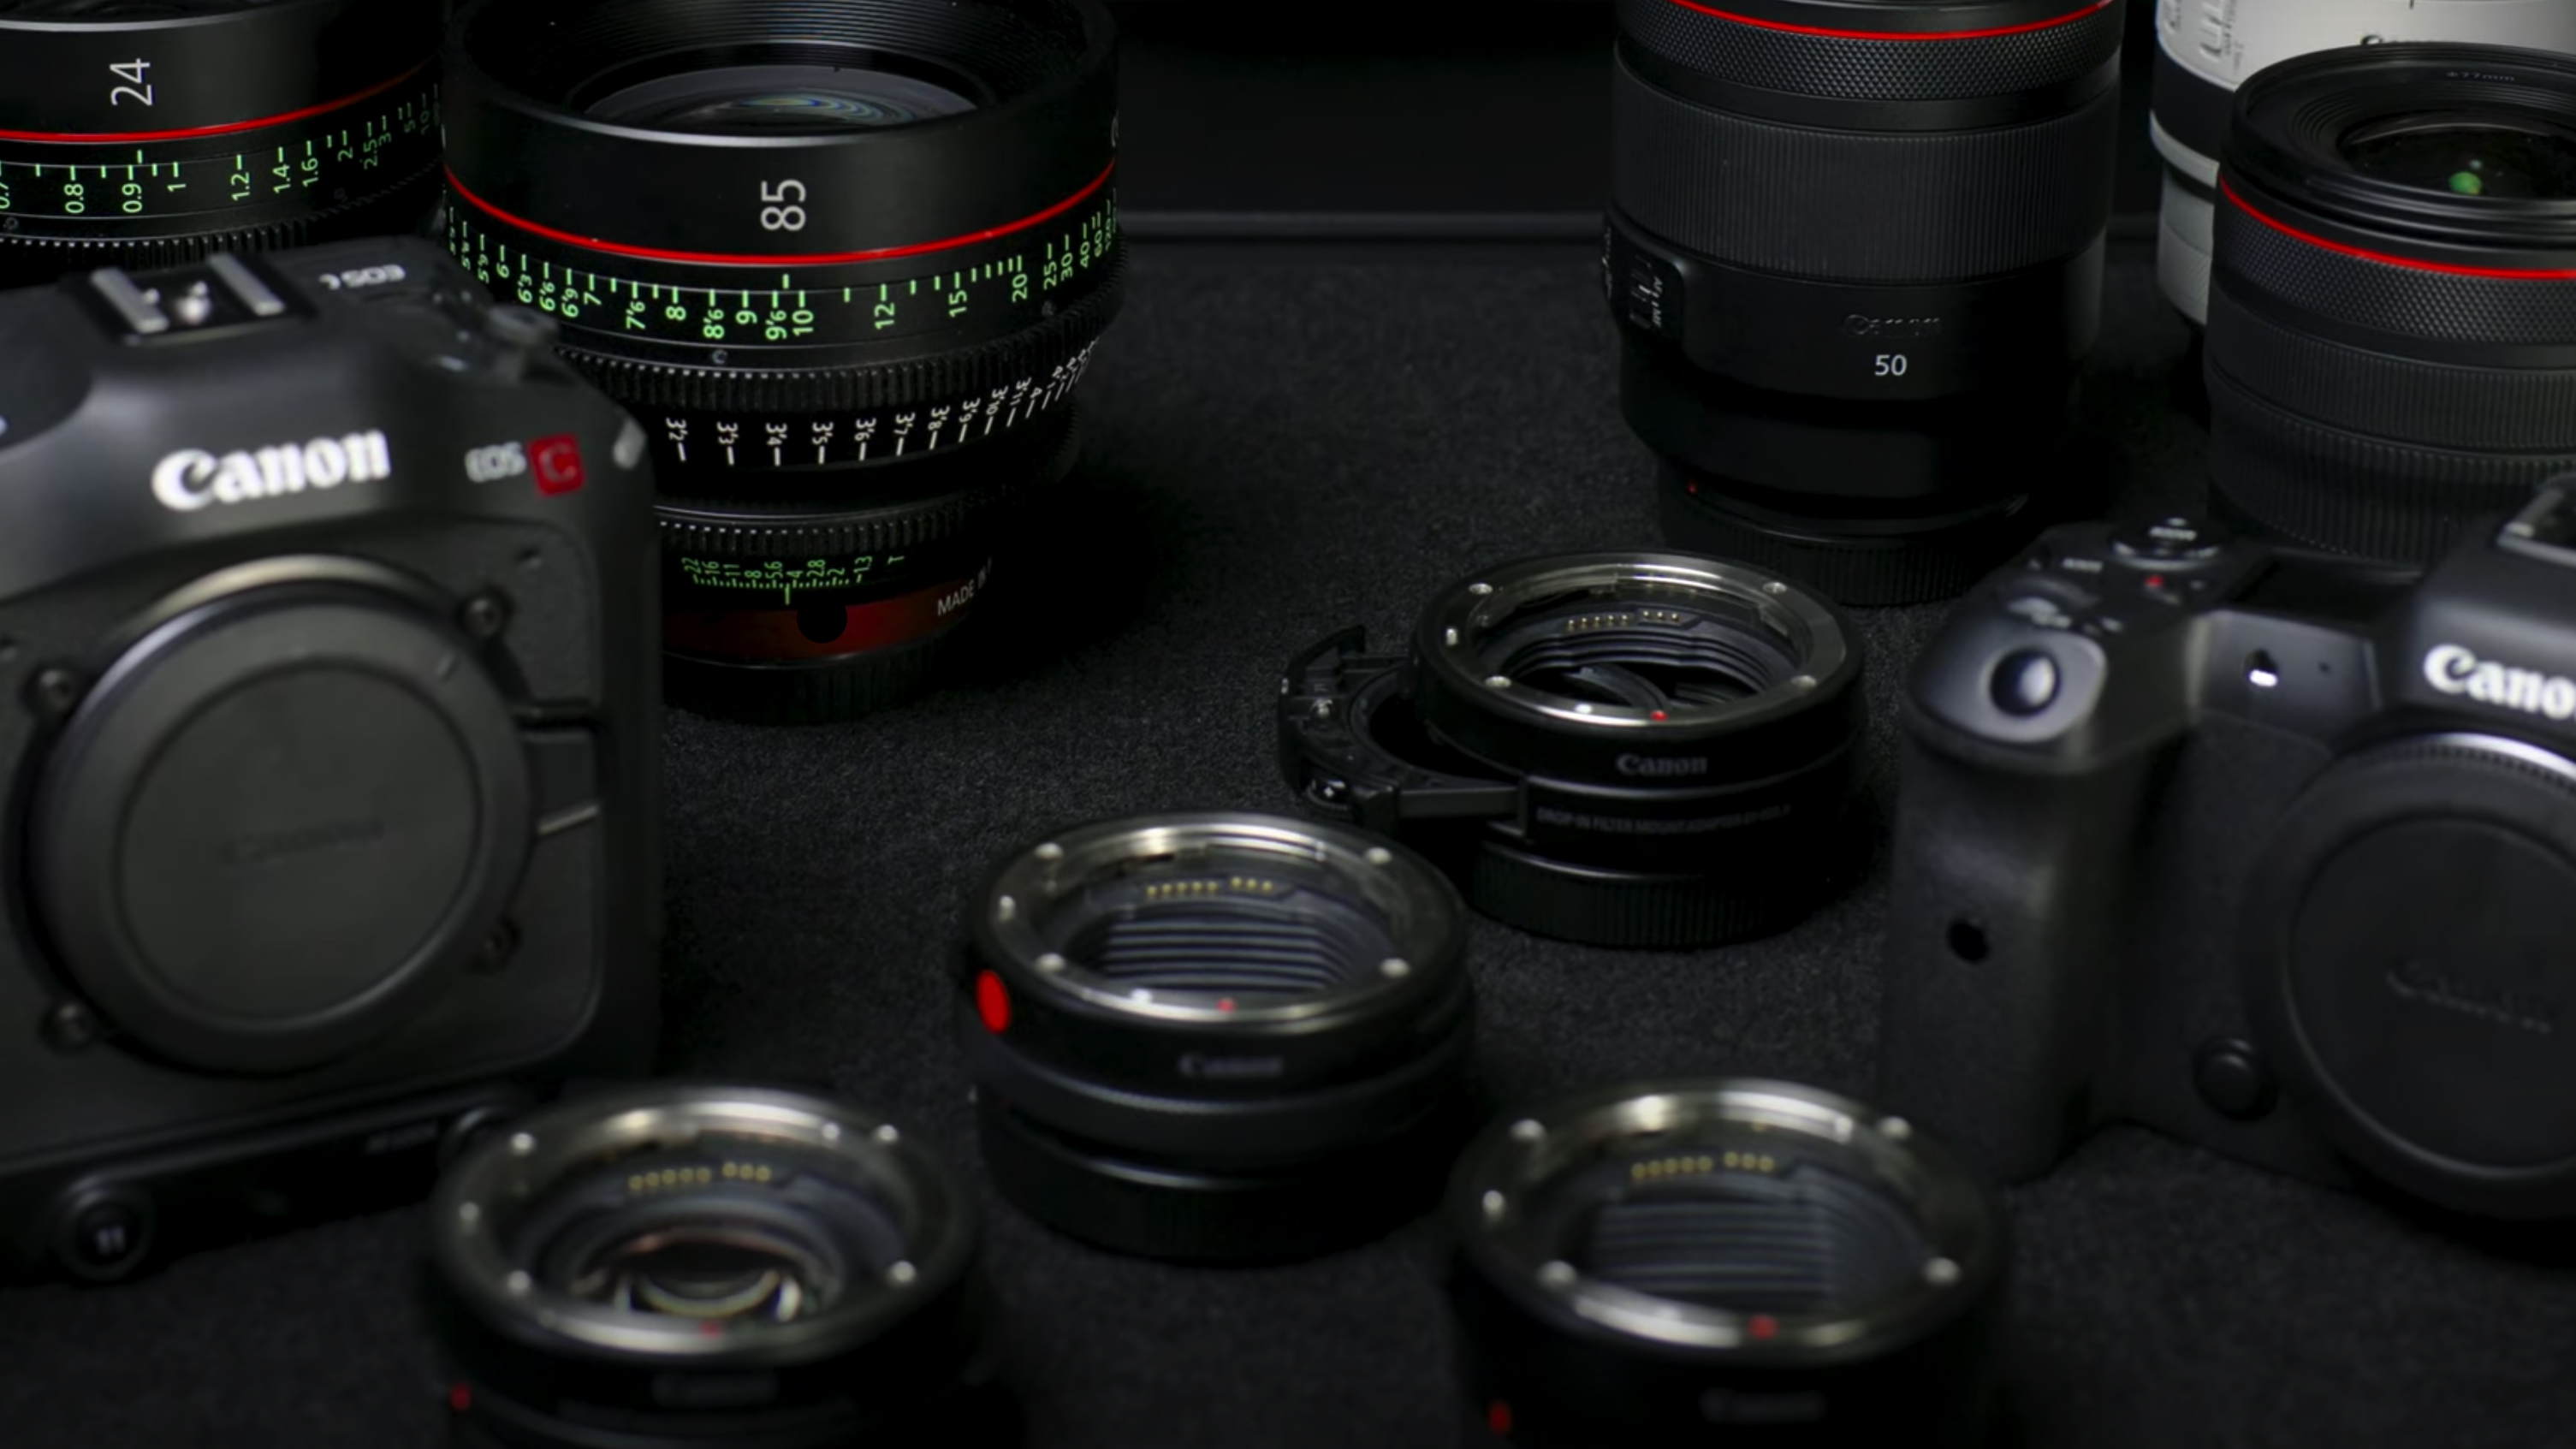 The Canon EOS R5 C sat among a range of lenses